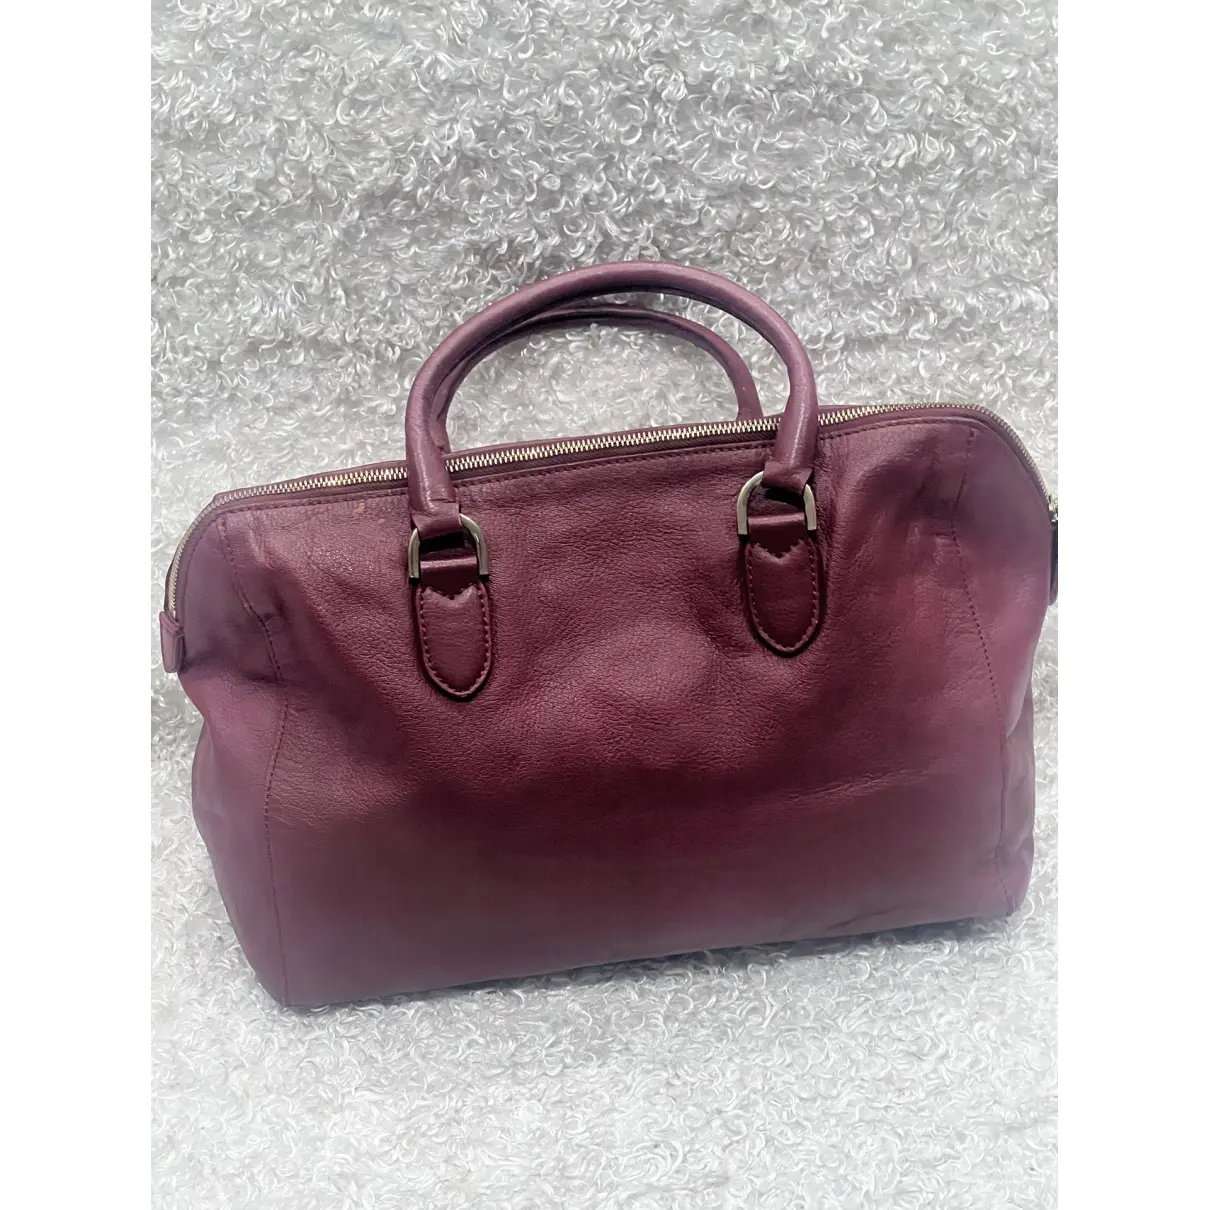 Buy Mulberry Del Rey leather satchel online